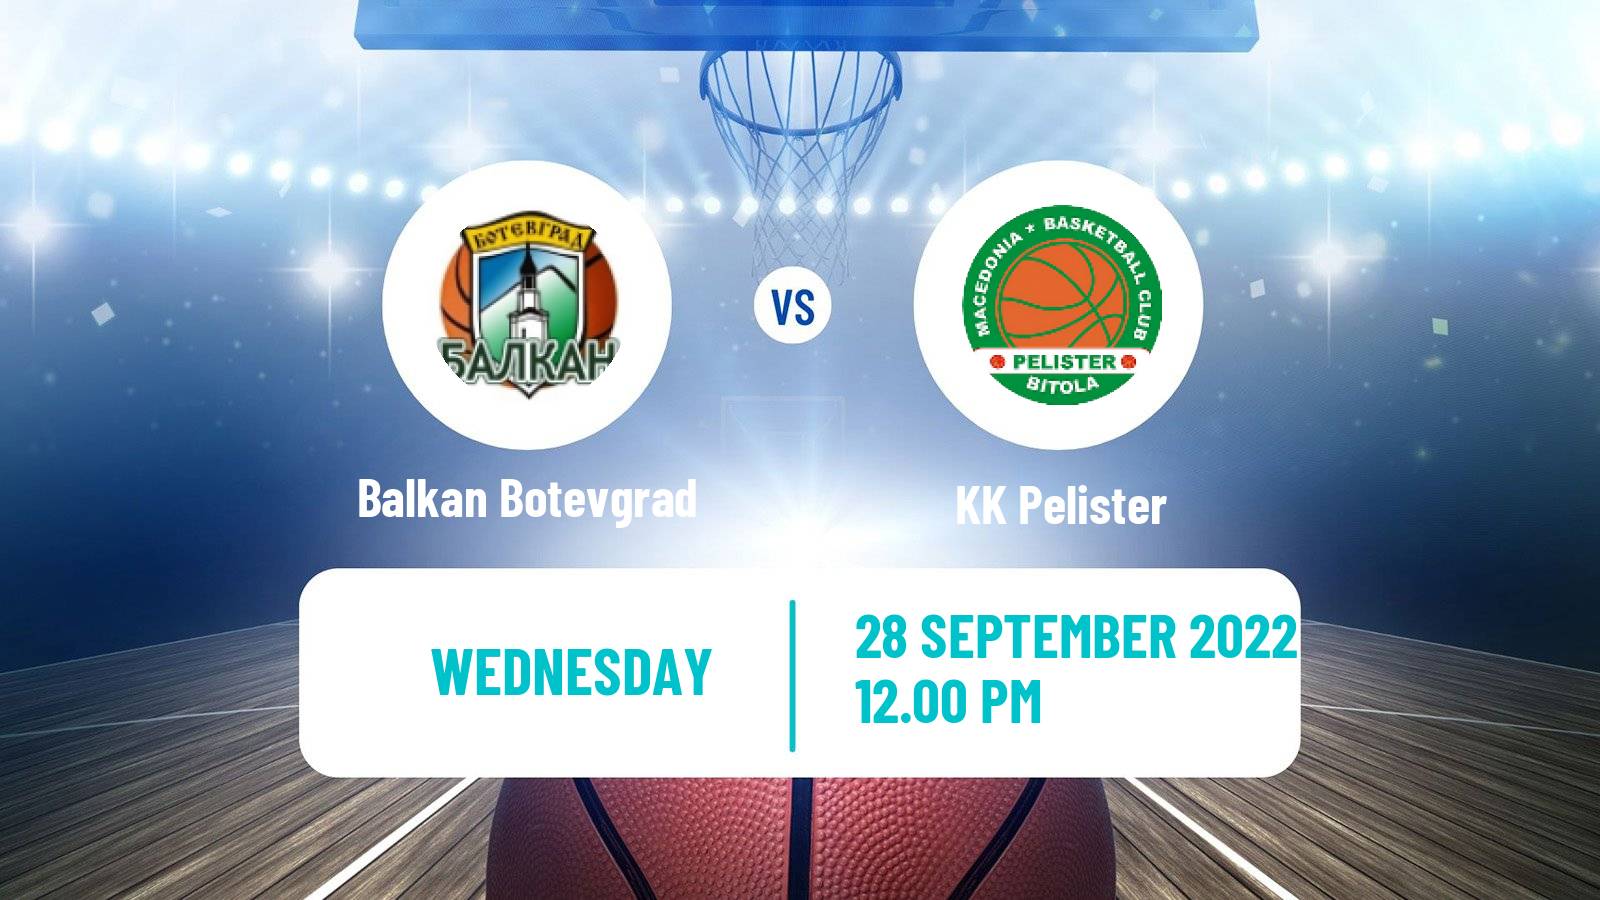 Basketball Club Friendly Basketball Balkan Botevgrad - Pelister